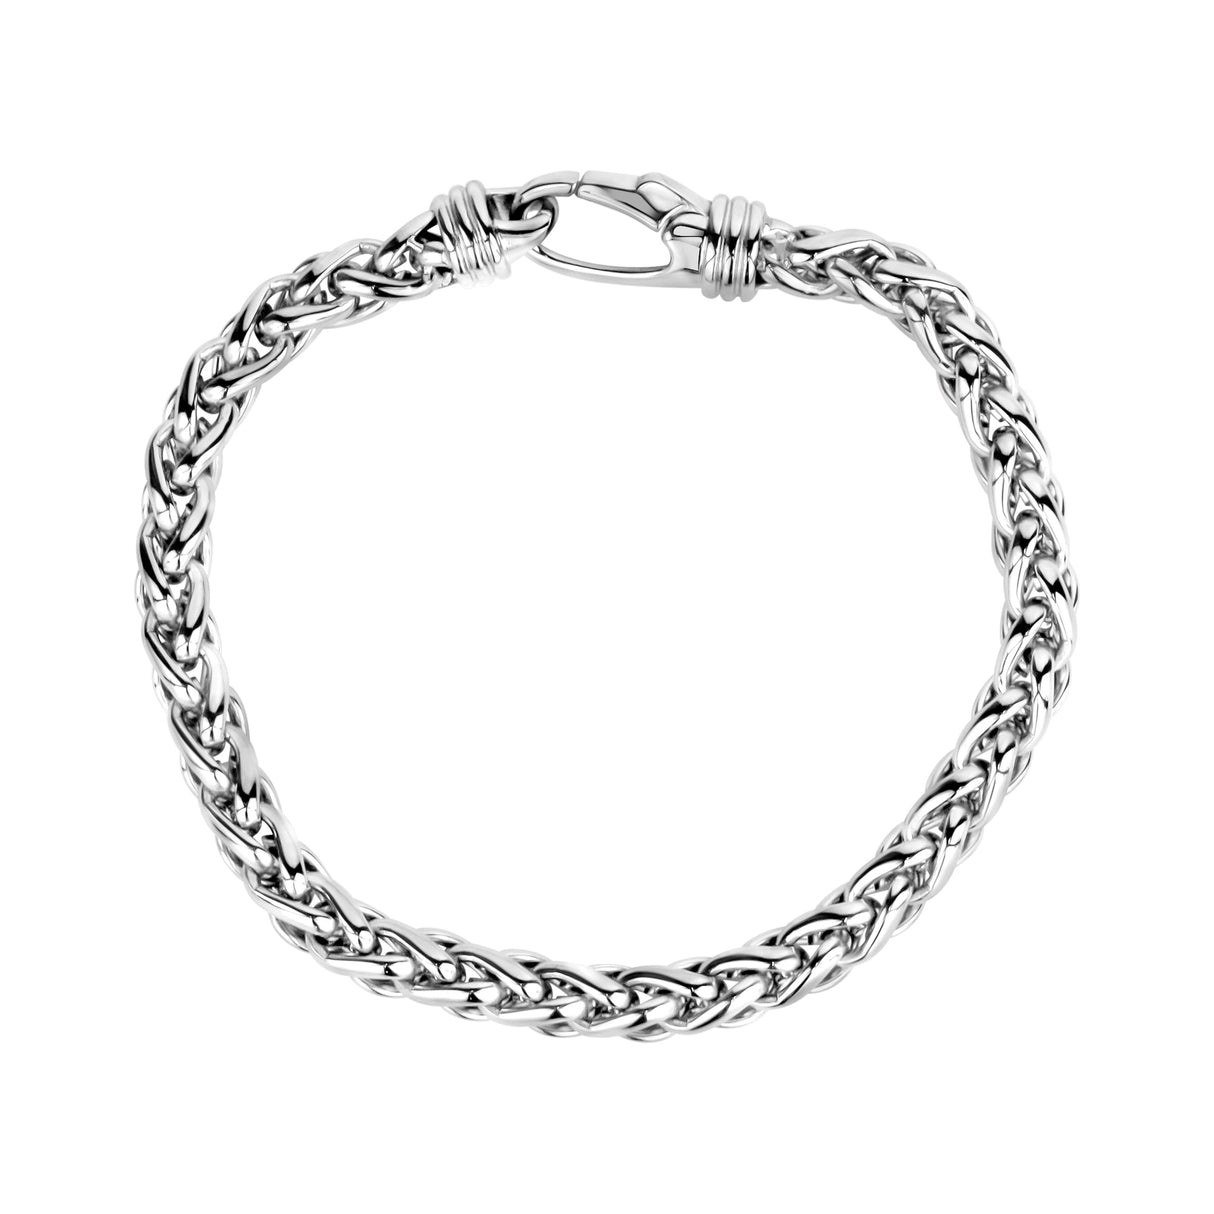 Designer Wheat Chain Bracelet | 6MM - Unisex Steel Bracelet - The Steel Shop